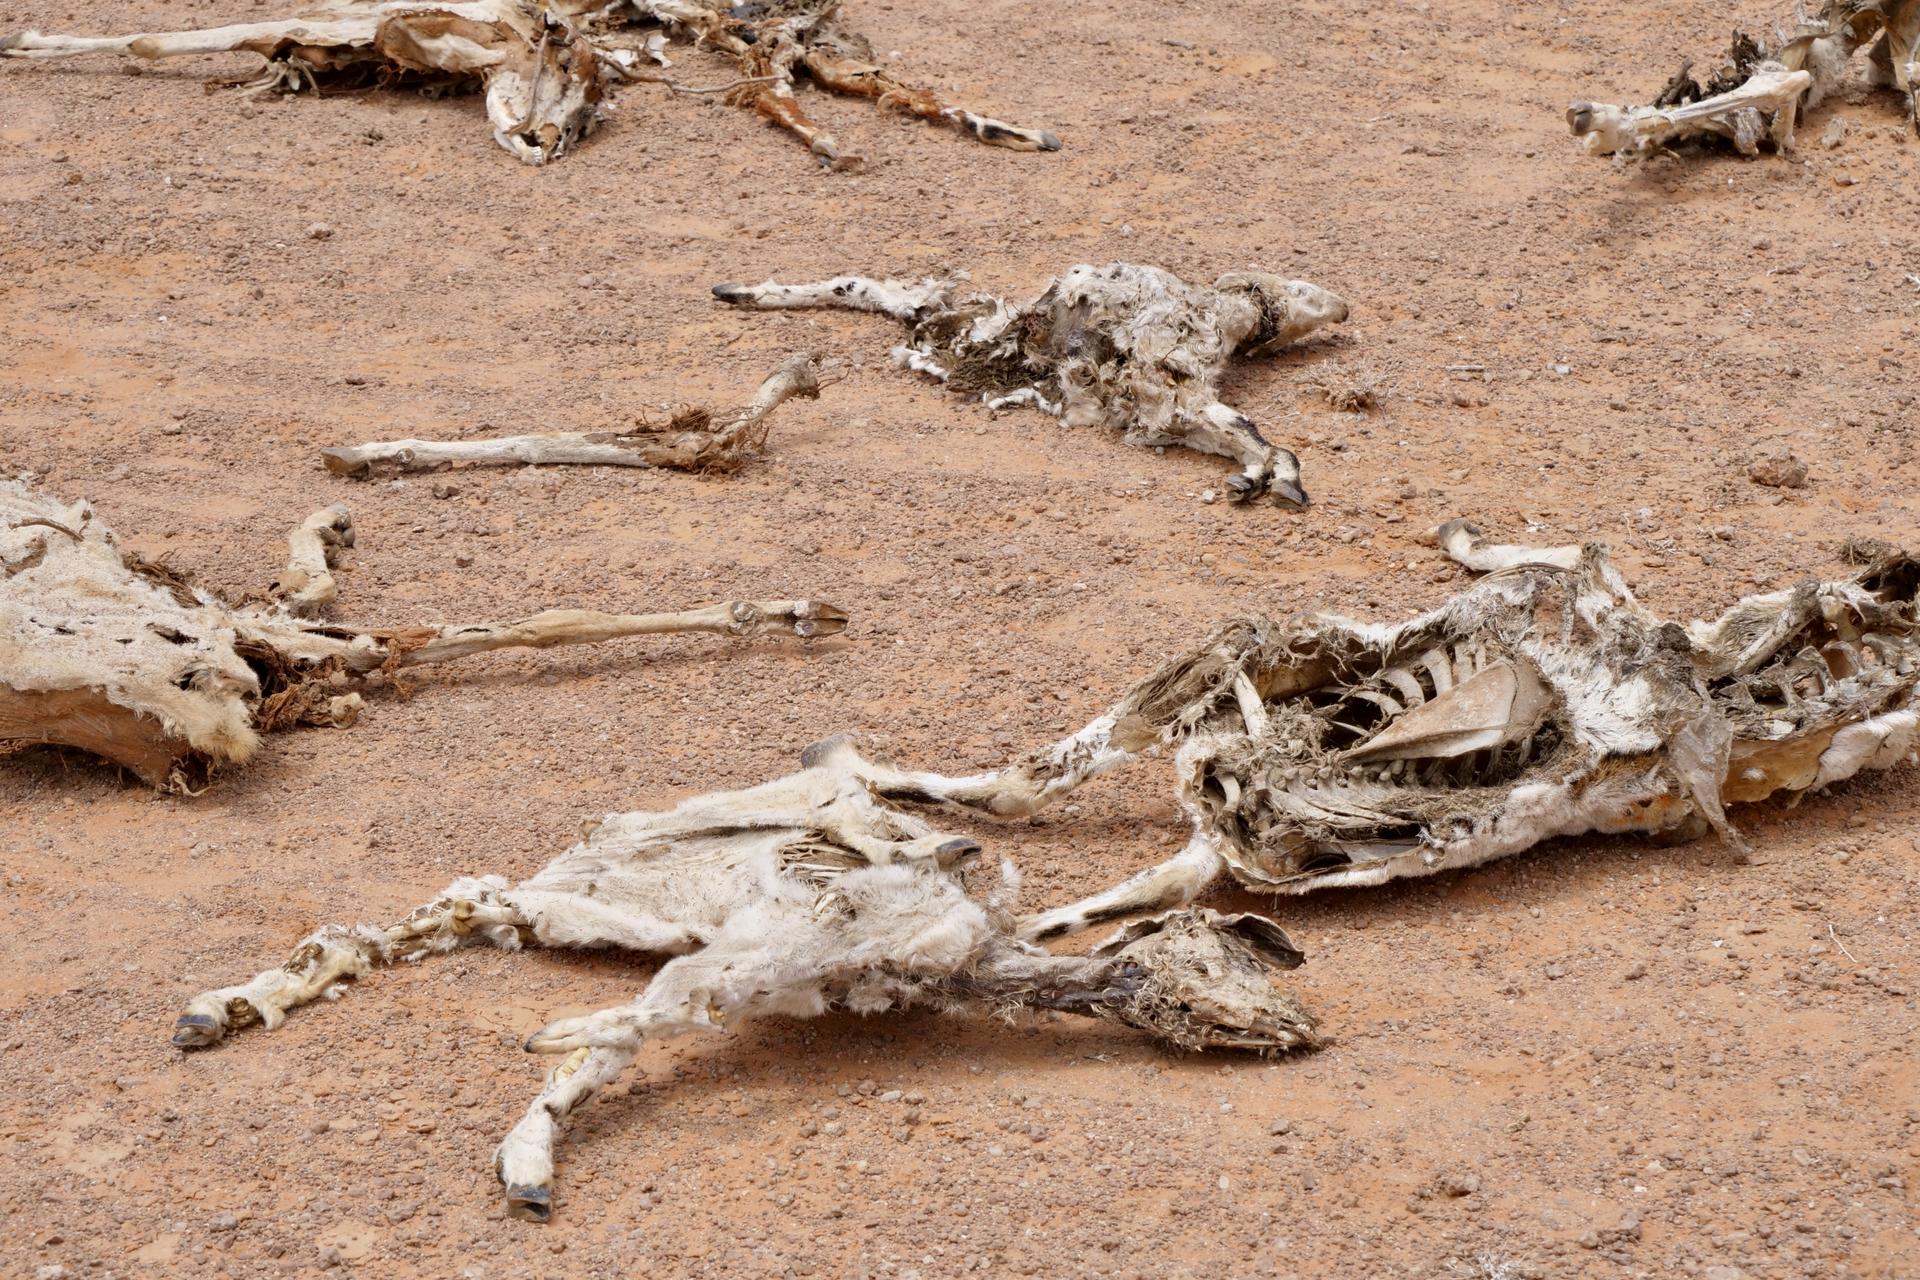 Dead livestock litter the ground in Kureyson village in Galkayo, Somalia